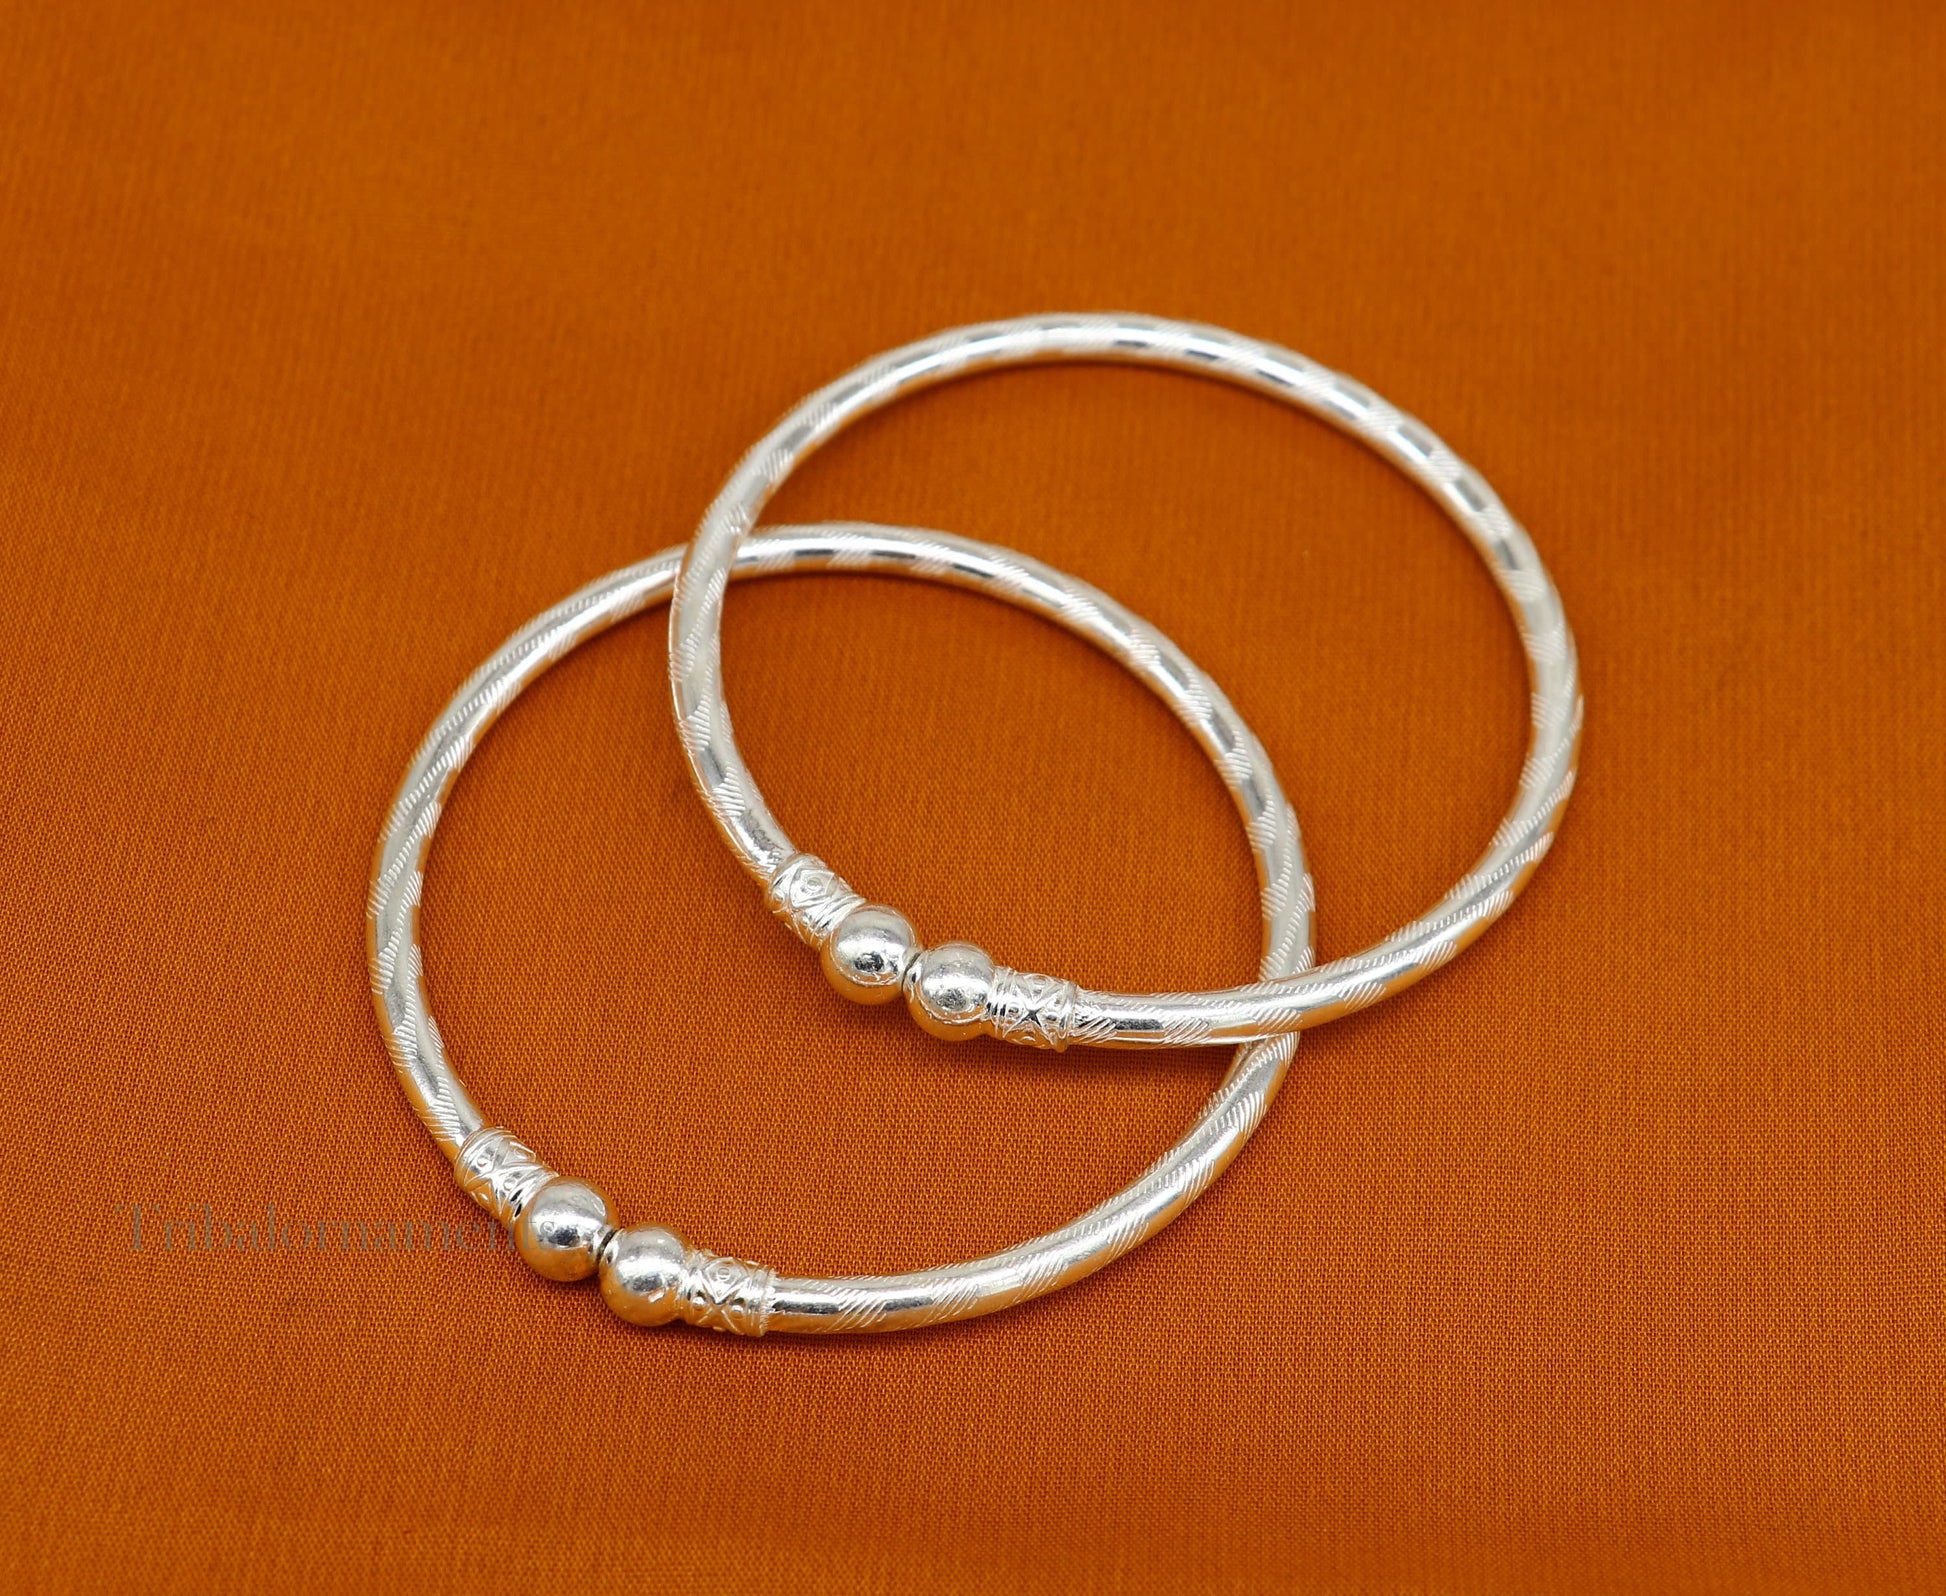 Plain white design sterling silver handmade amazing design bangle bracelet kada, excellent customized design bangle kada unisex gift nba230 - TRIBAL ORNAMENTS